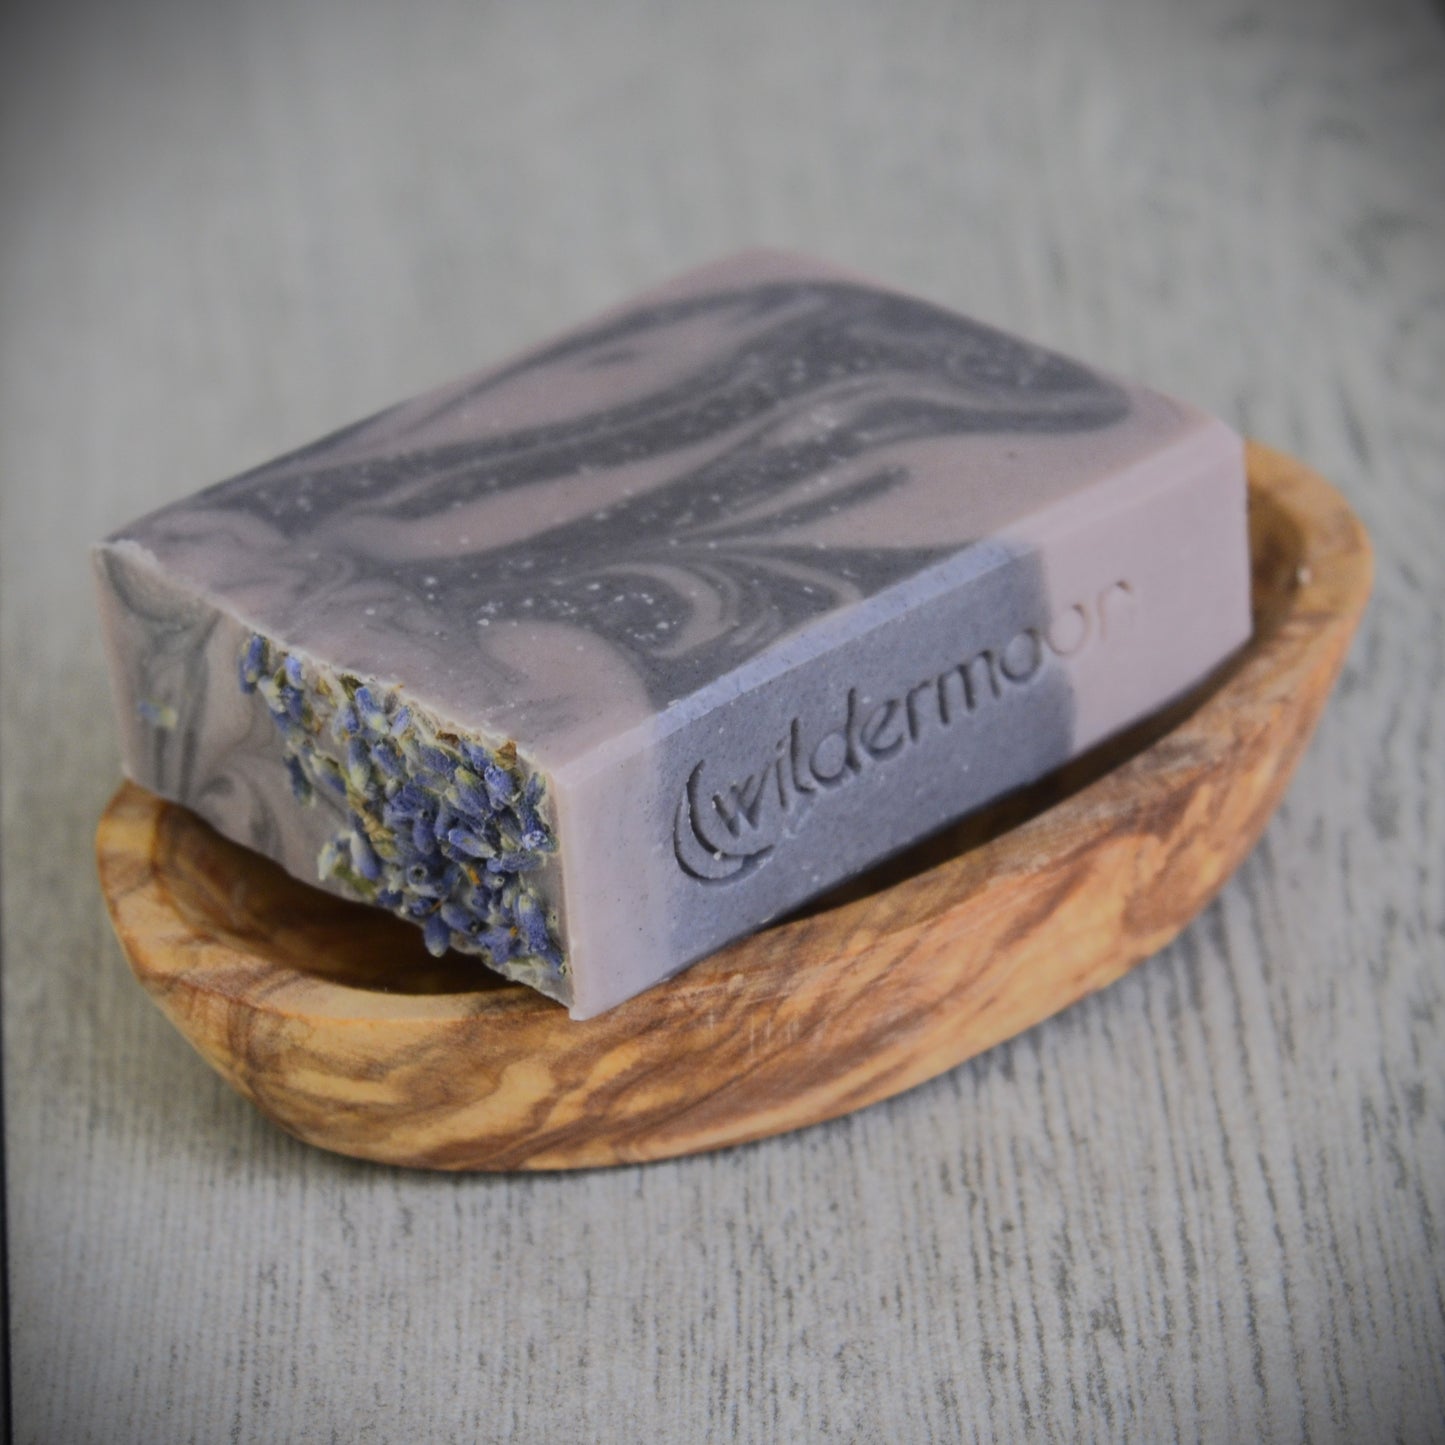 La Plata Lavender artisan soap